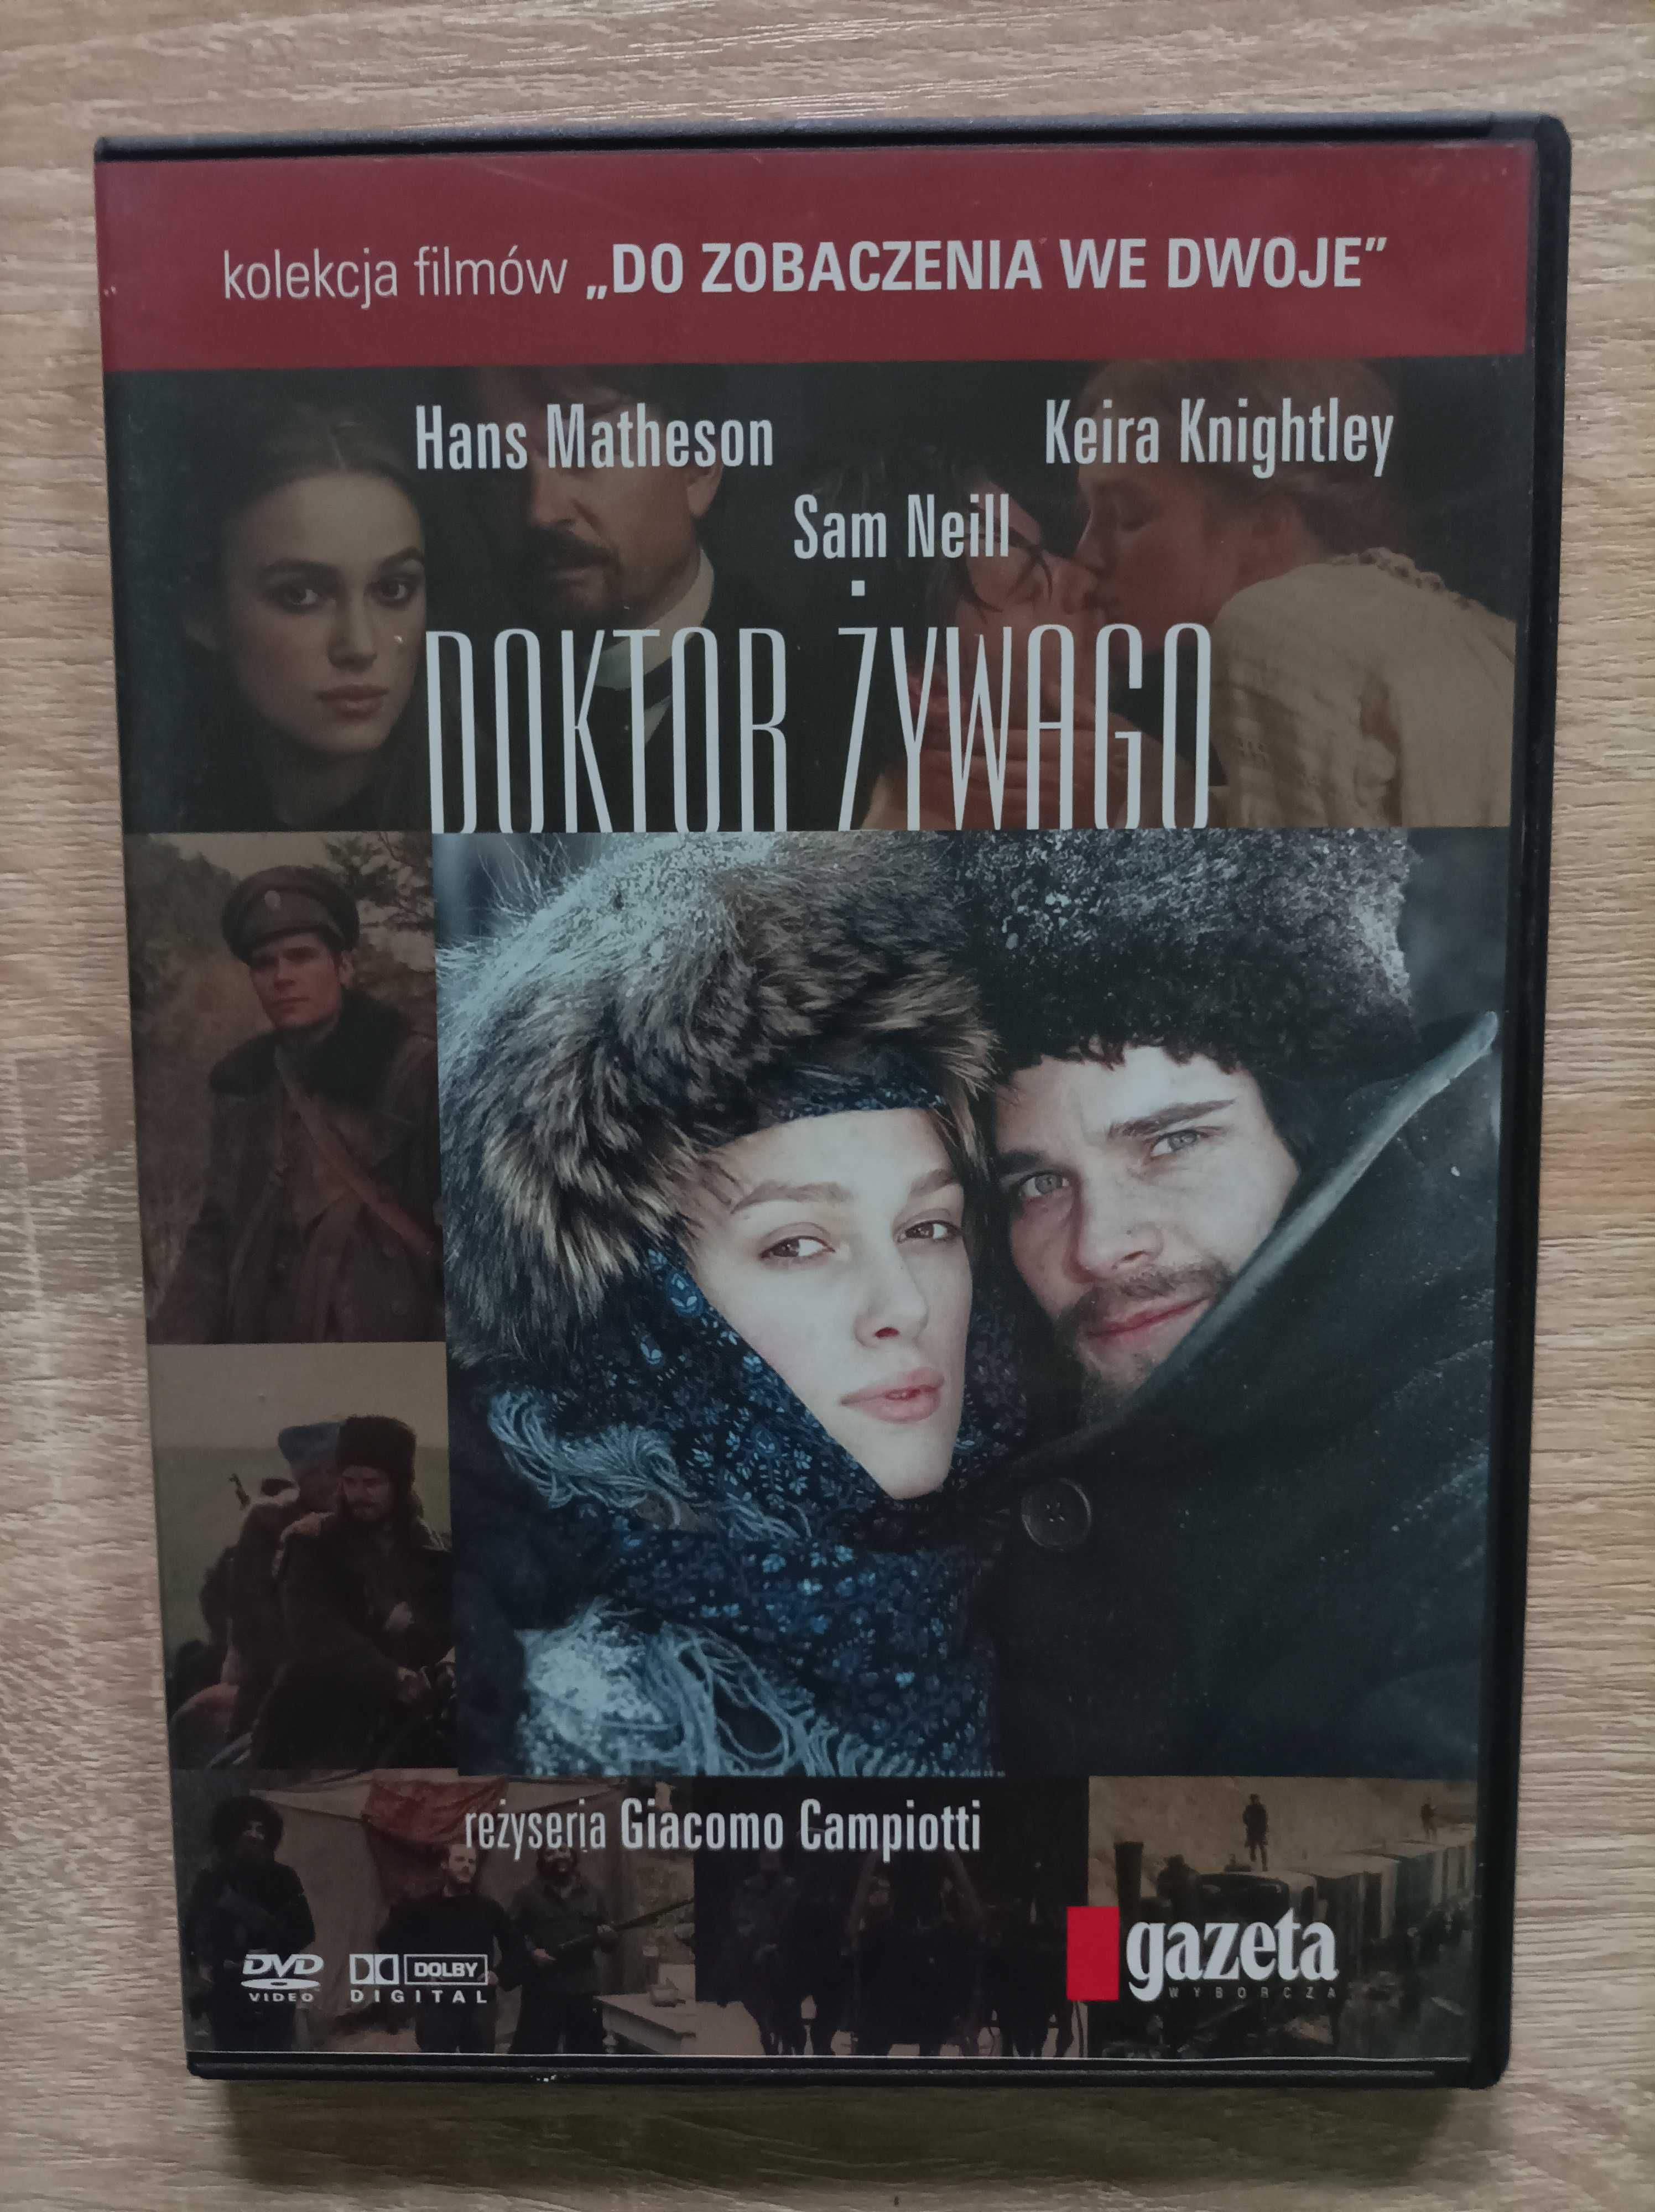 Film DVD Doktor Żywago